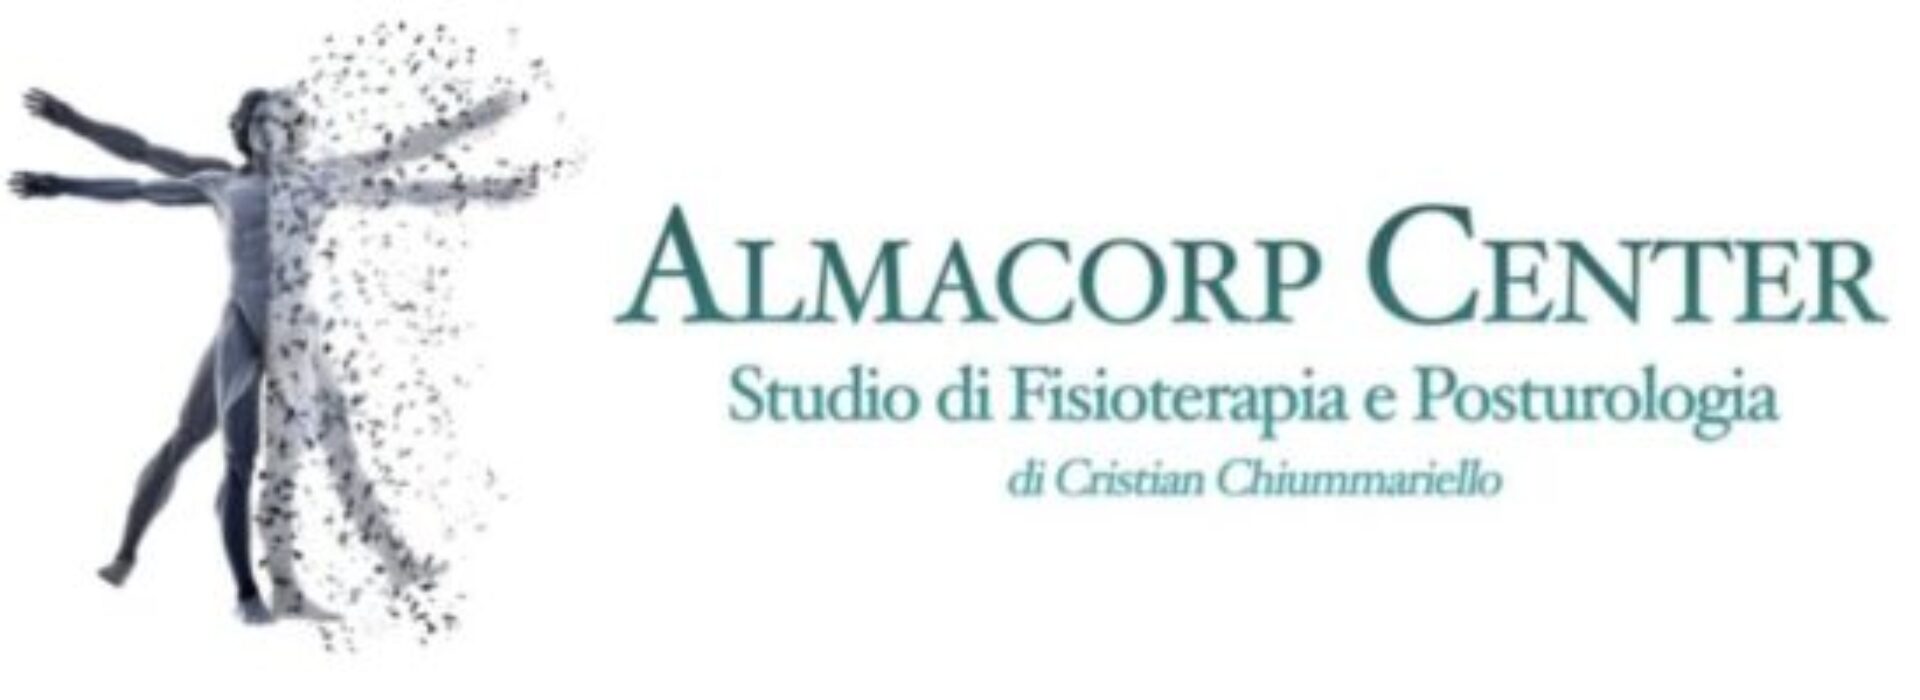 Almacorp Center